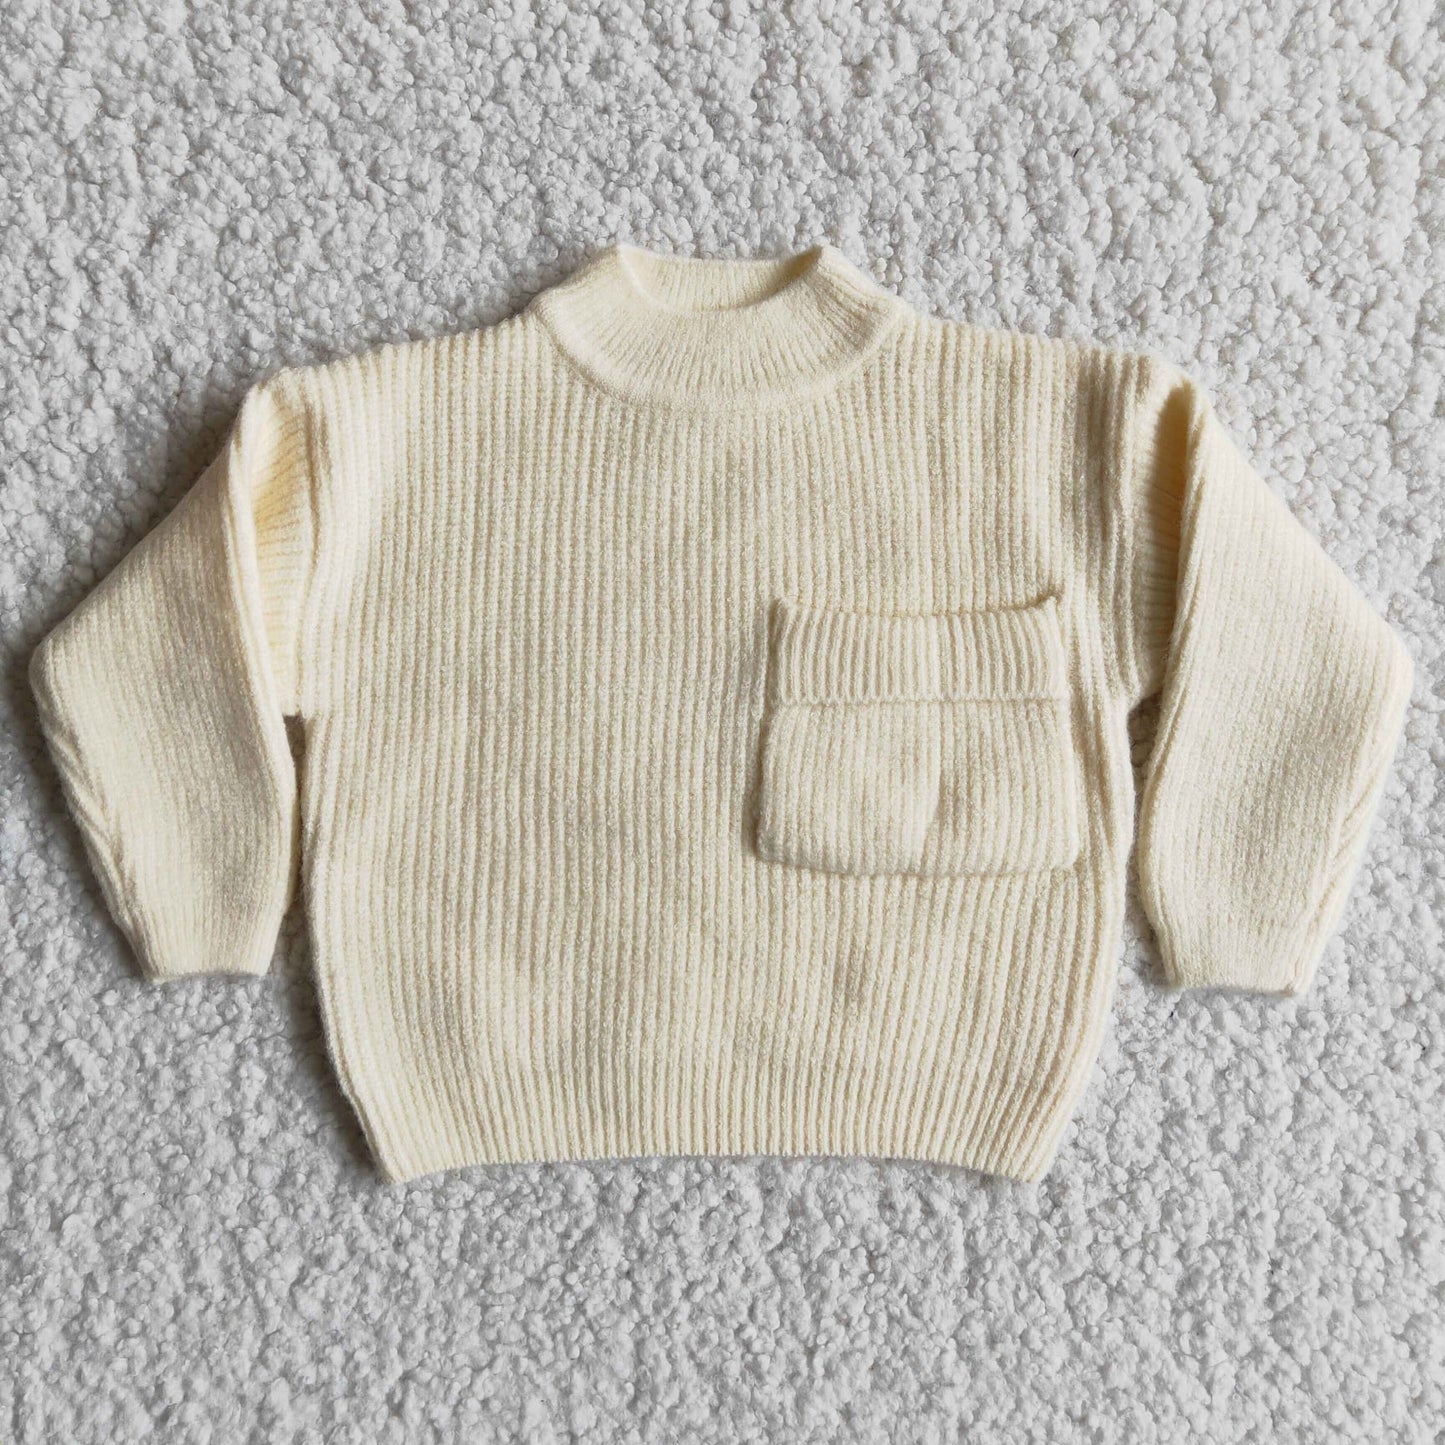 Baby Girls Fall Winter Sweater